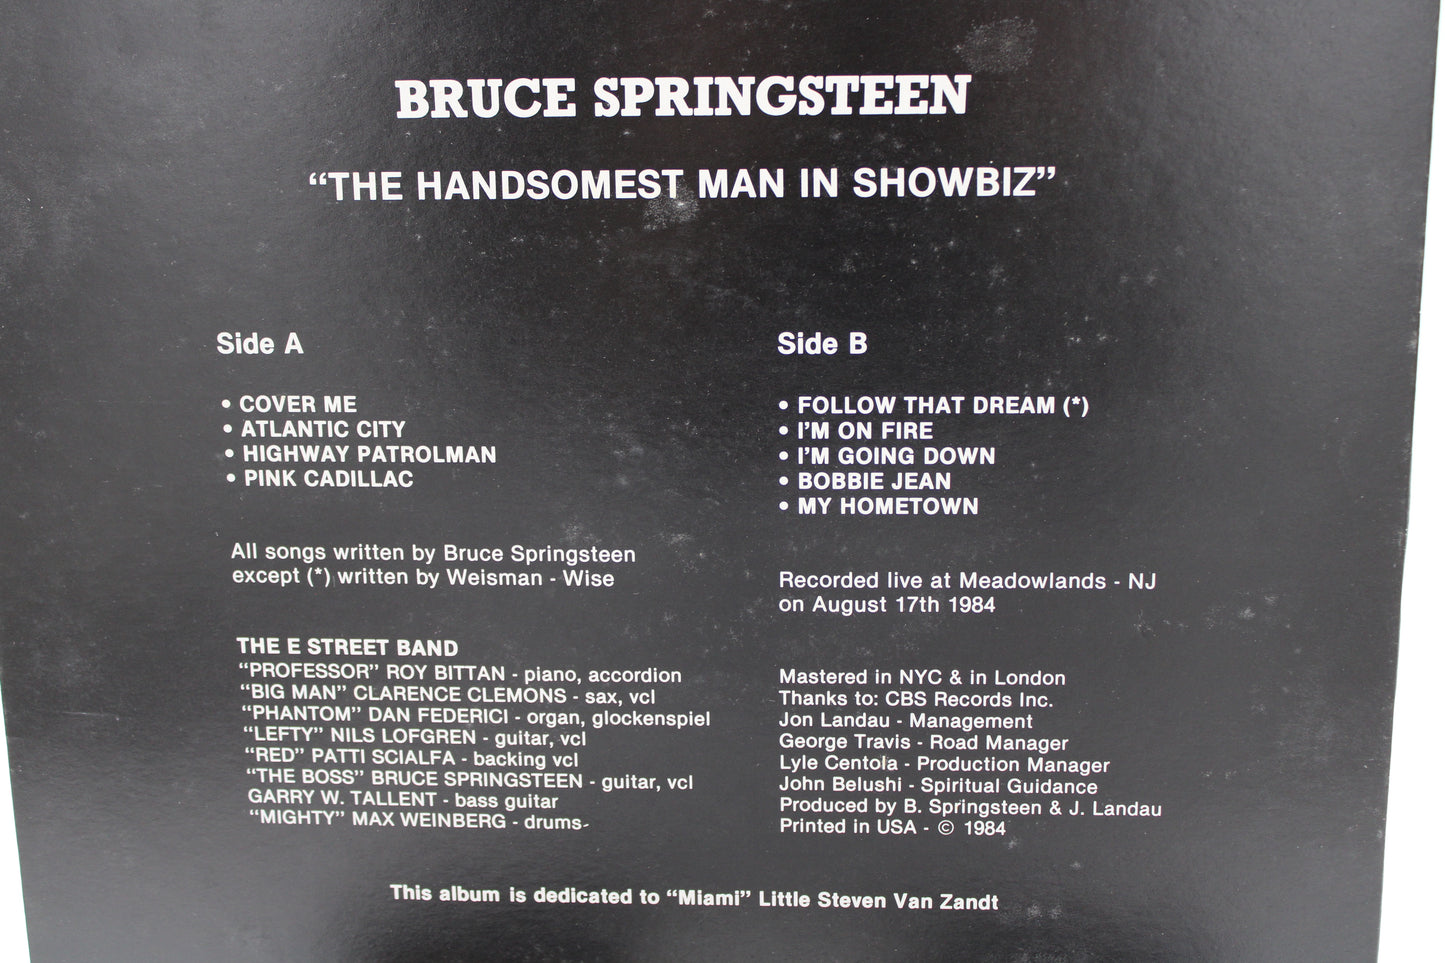 Bruce Springsteen - The Handsomest Man in Showbiz - Import from Italy 1984 - Live Meadowlands NJ - Vinyl LP BLV